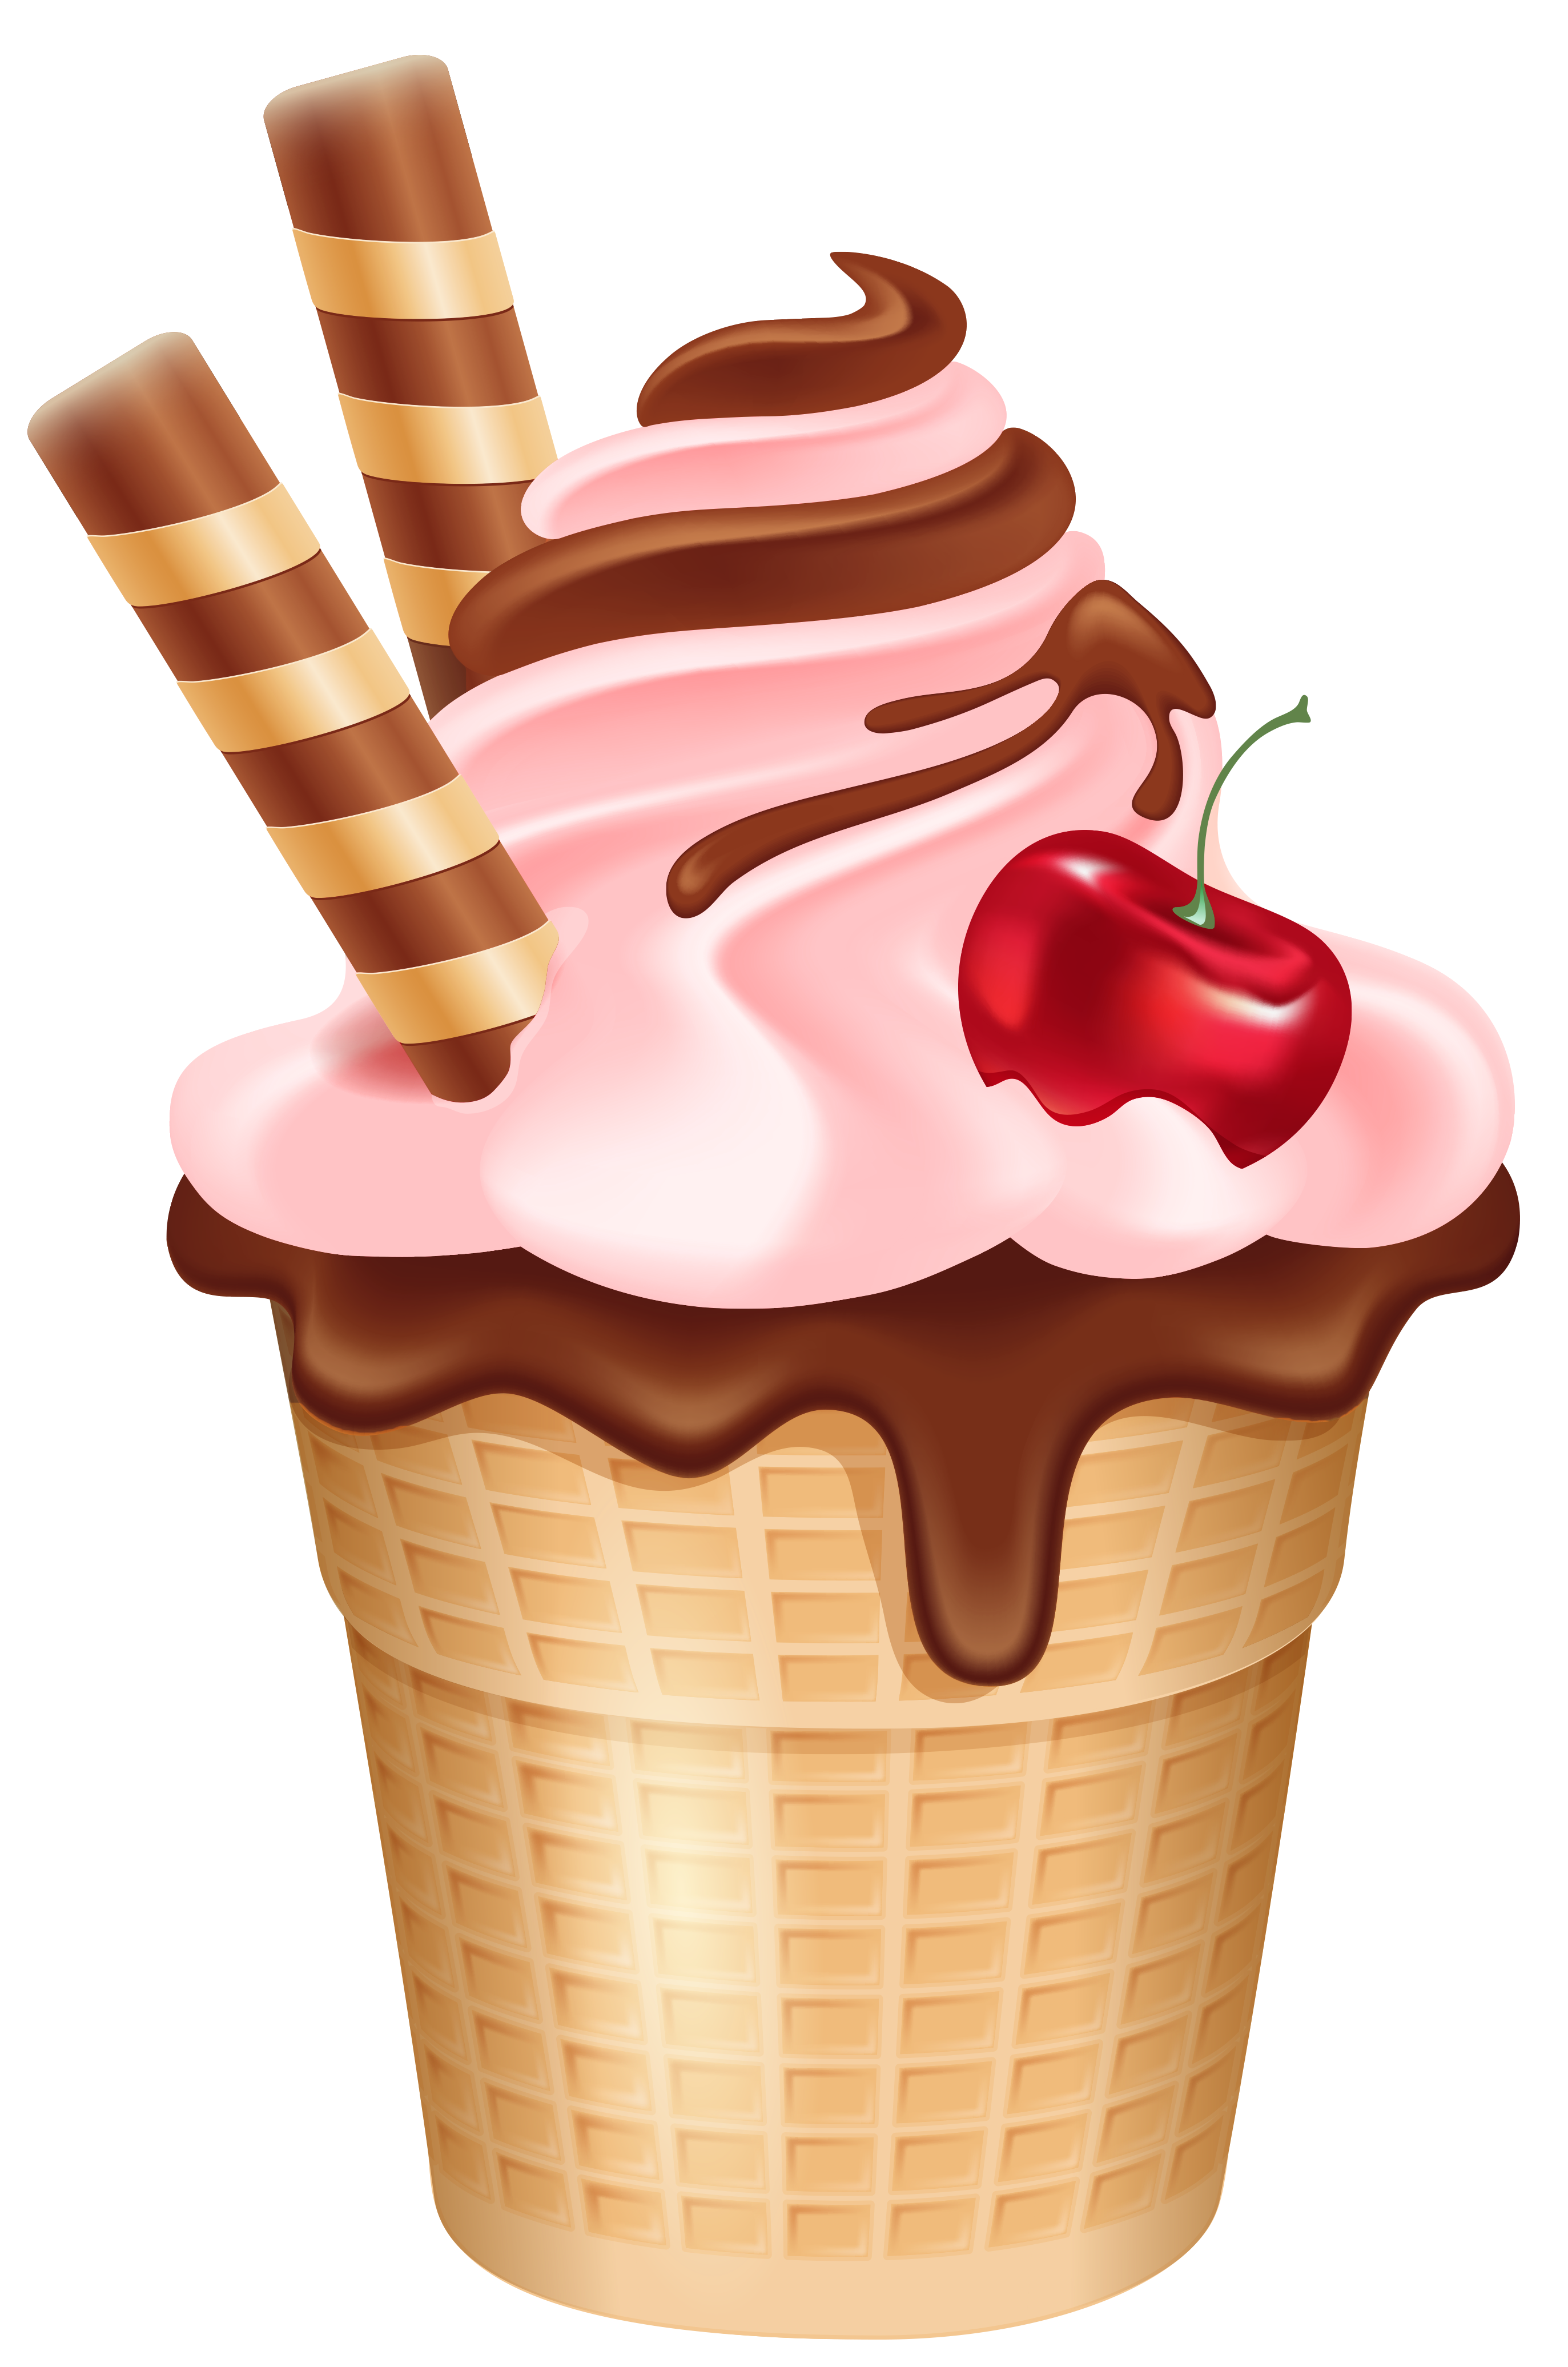 Cherry ice cream cup. Desserts clipart land